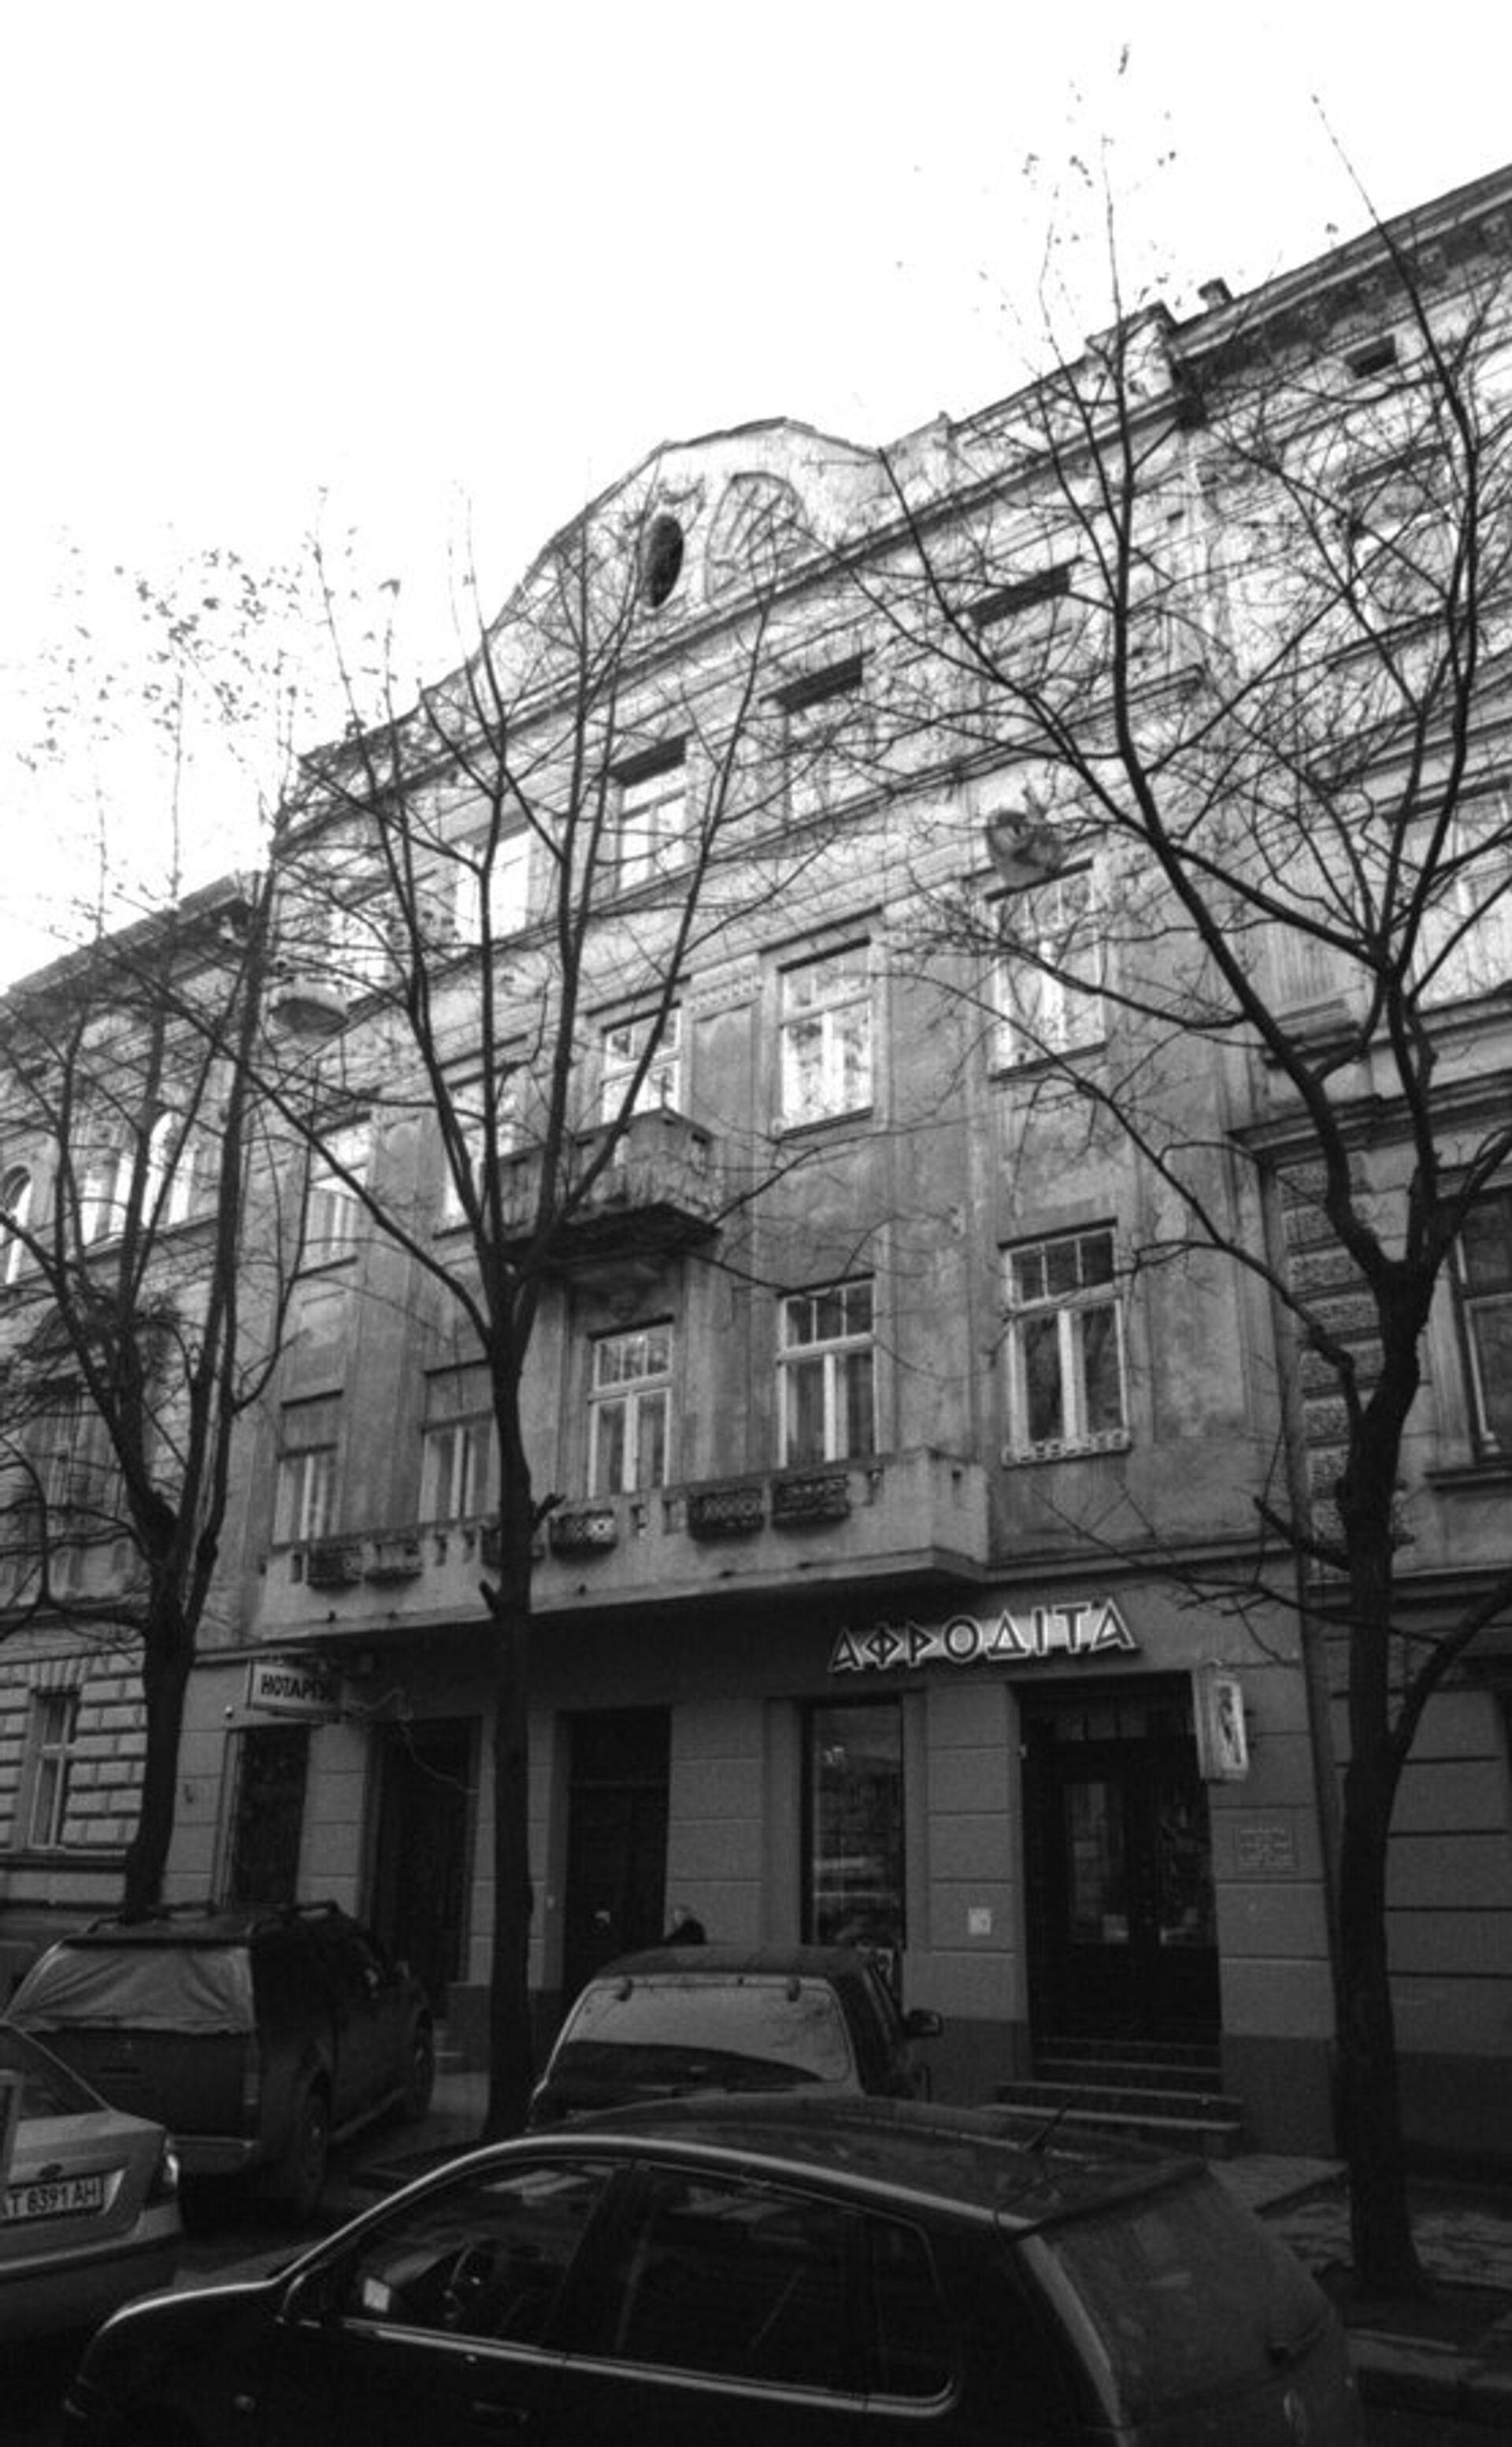 Дом во Львове, где жил Станислав Лем - РИА Новости, 1920, 12.09.2021